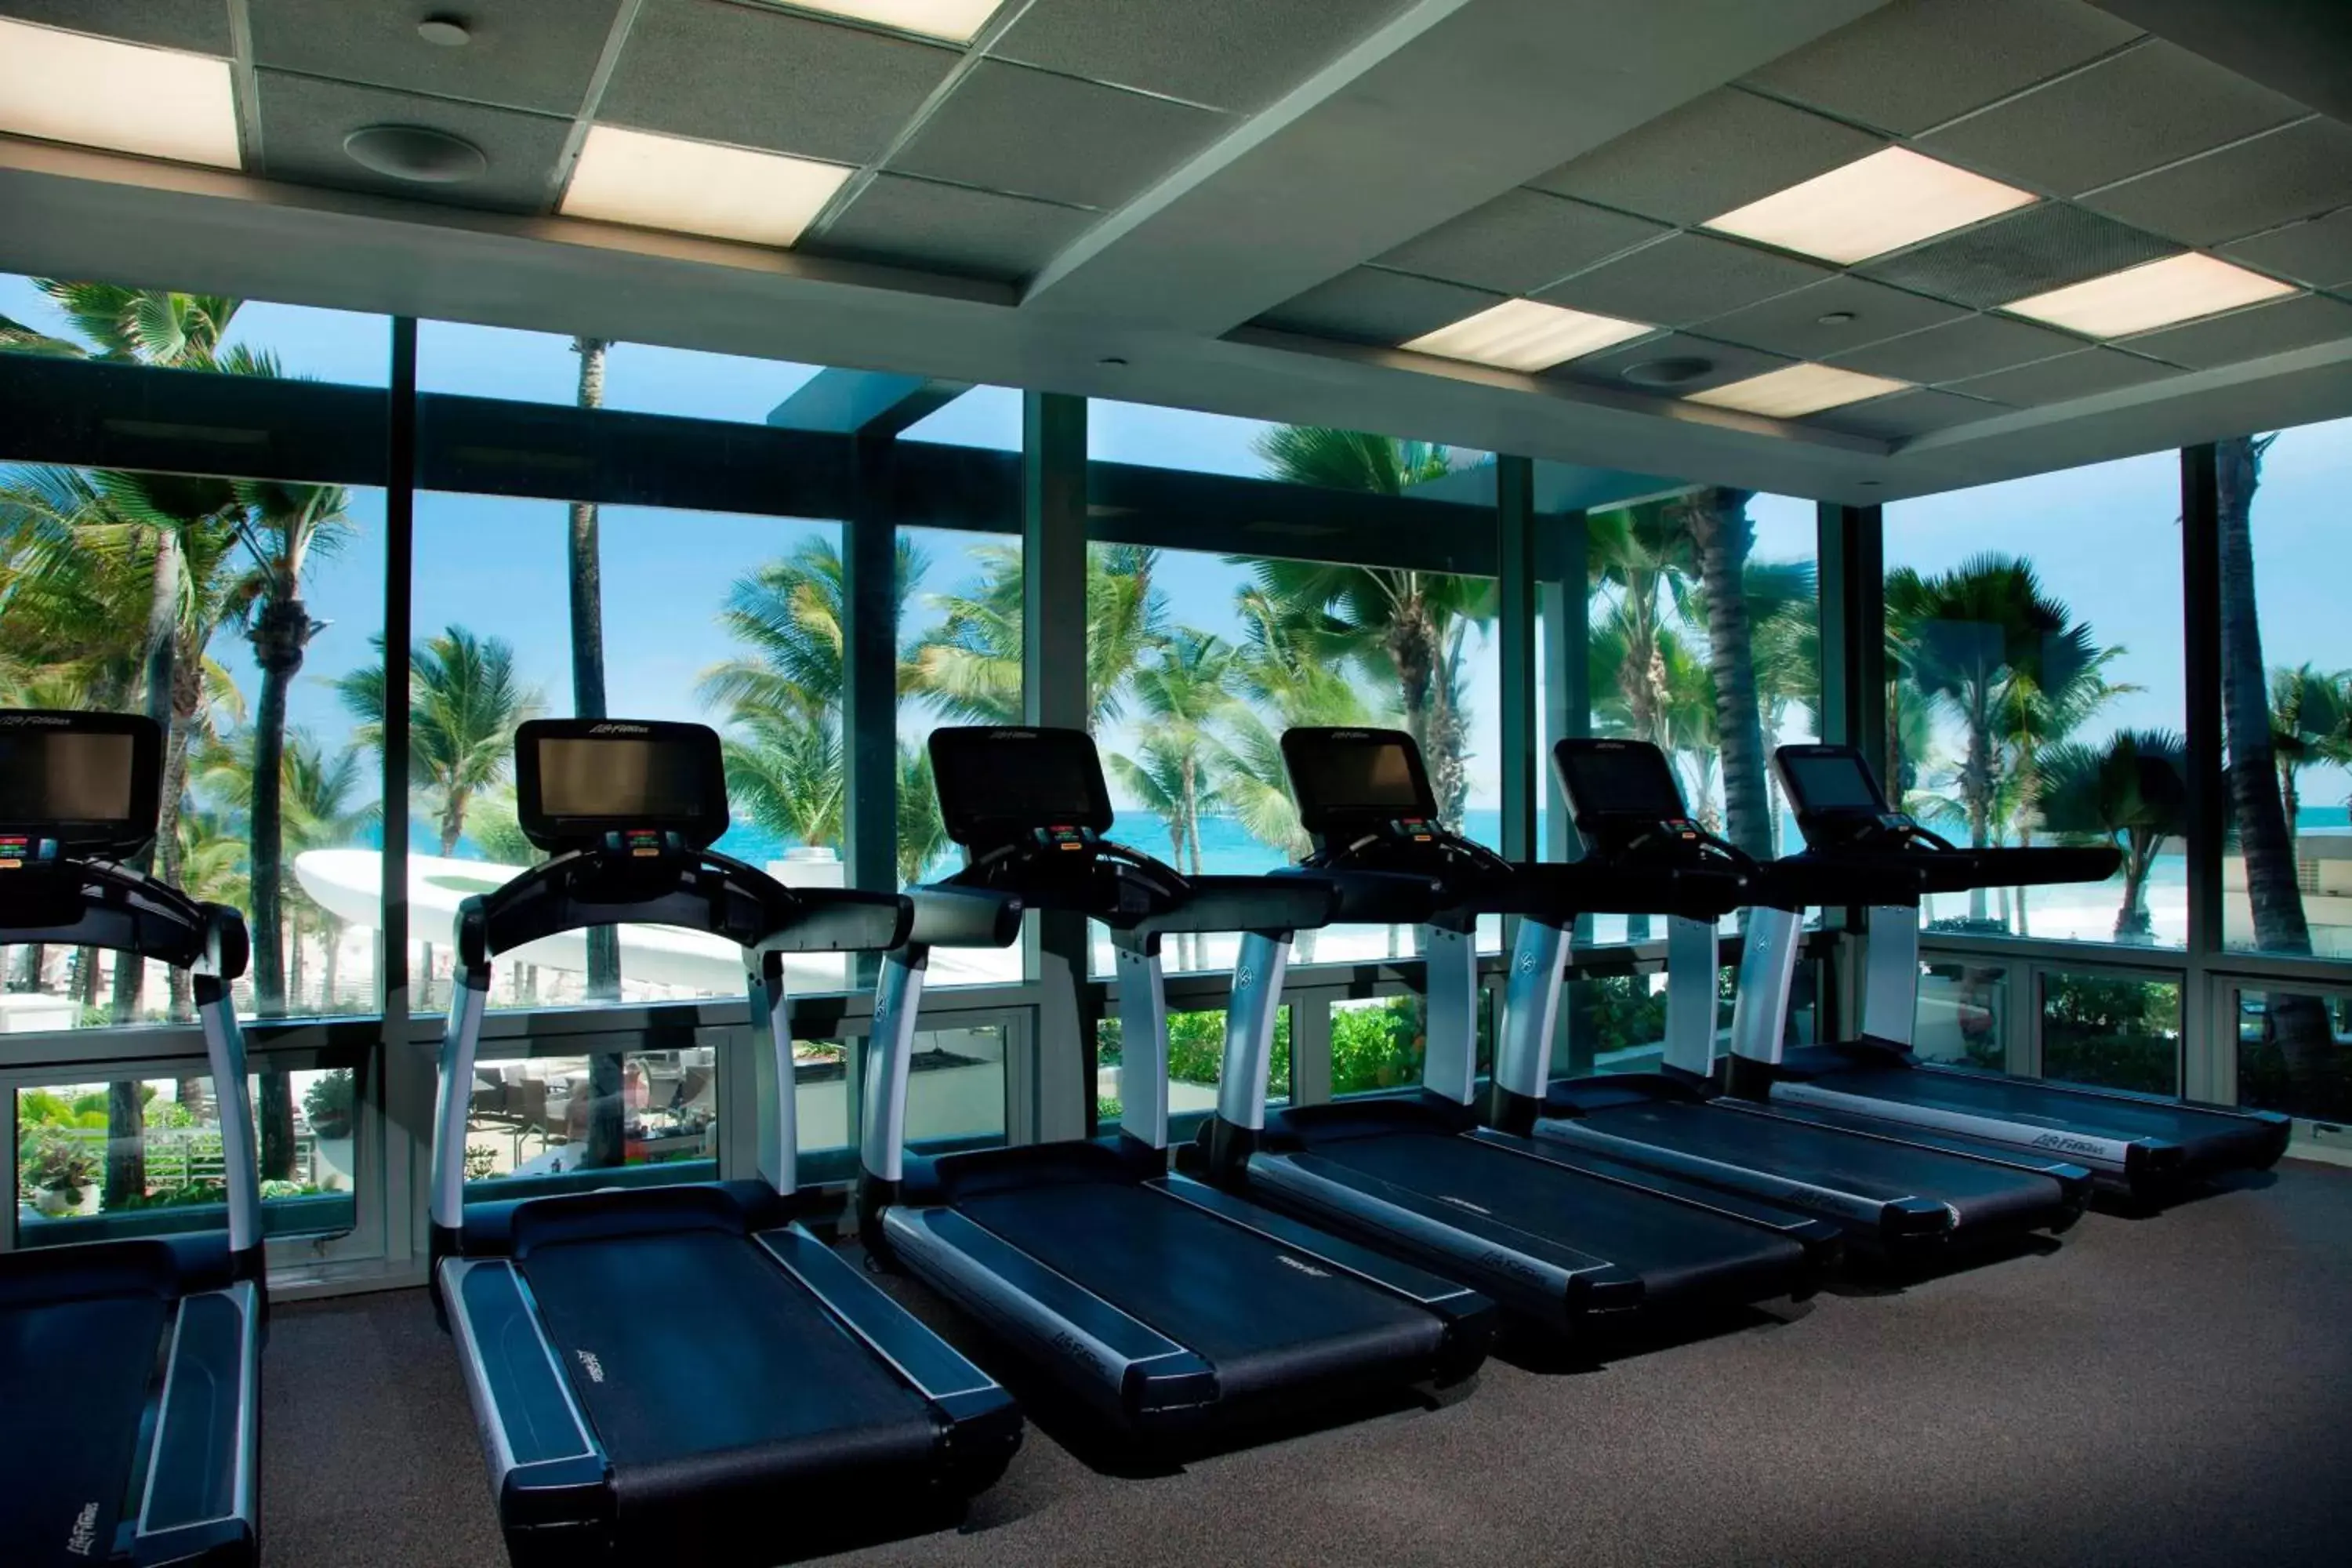 Fitness centre/facilities, Fitness Center/Facilities in La Concha Renaissance San Juan Resort